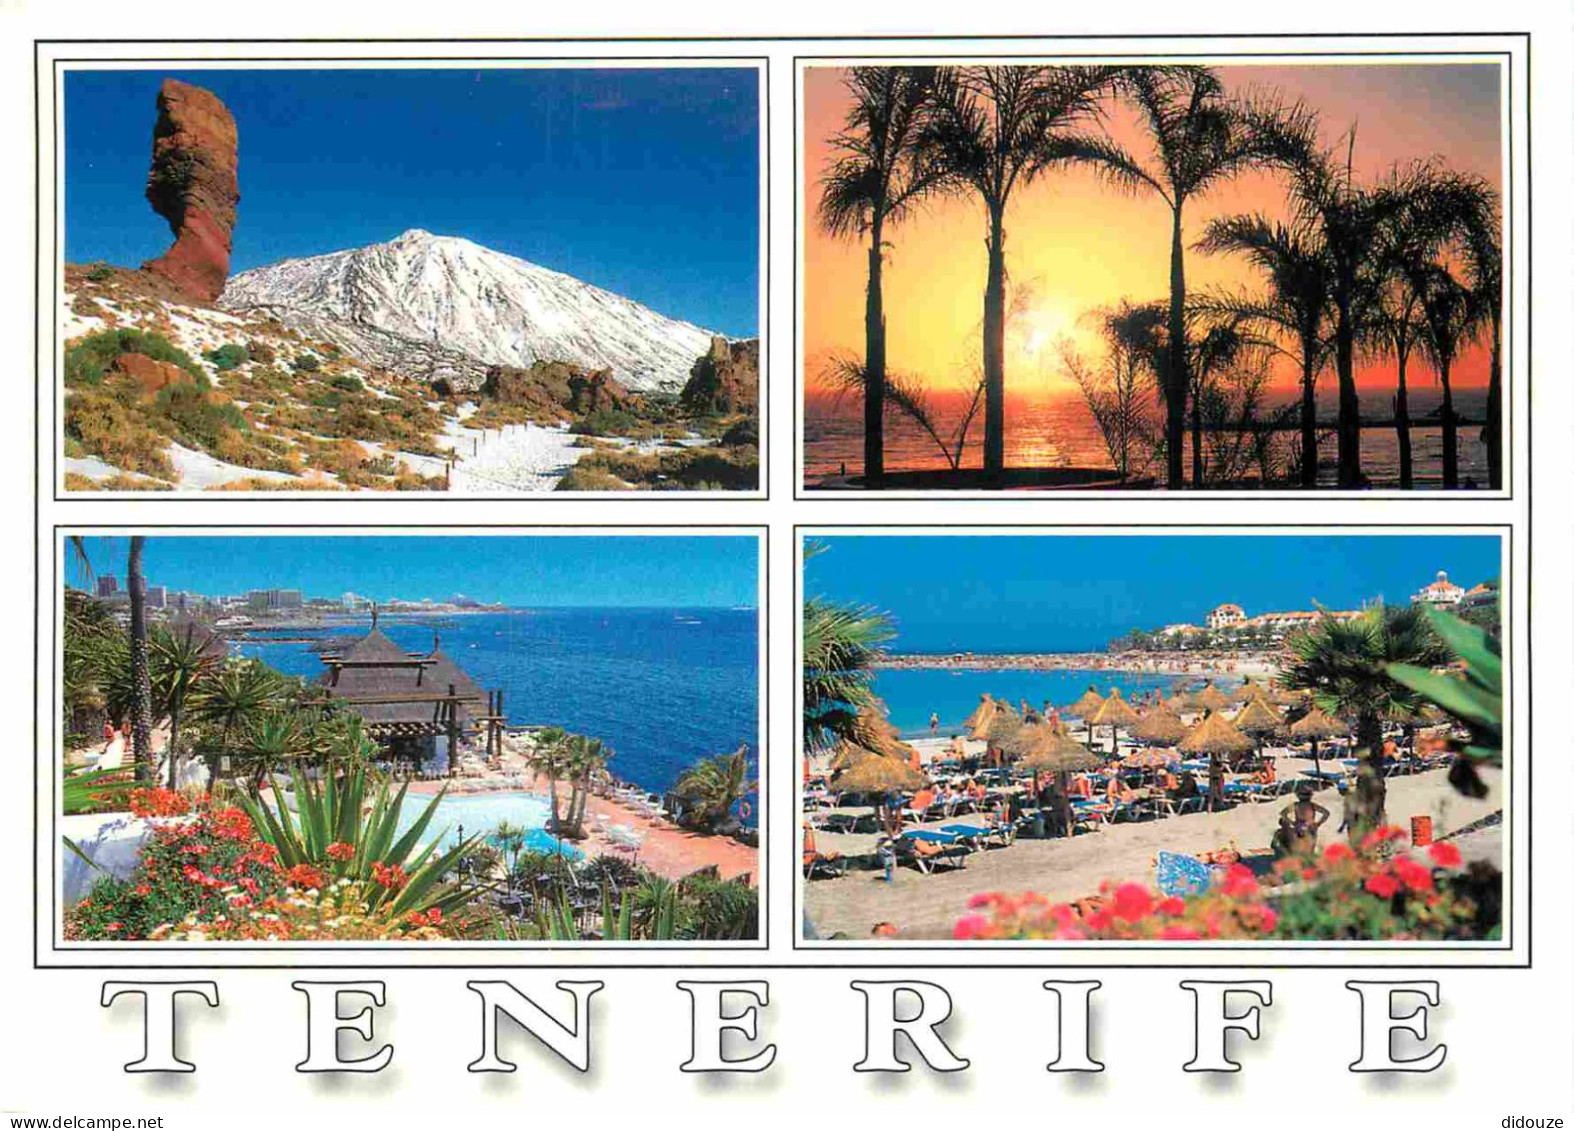 Espagne - Espana - Islas Canarias - Tenerife - Multivues - CPM - Voir Scans Recto-Verso - Tenerife